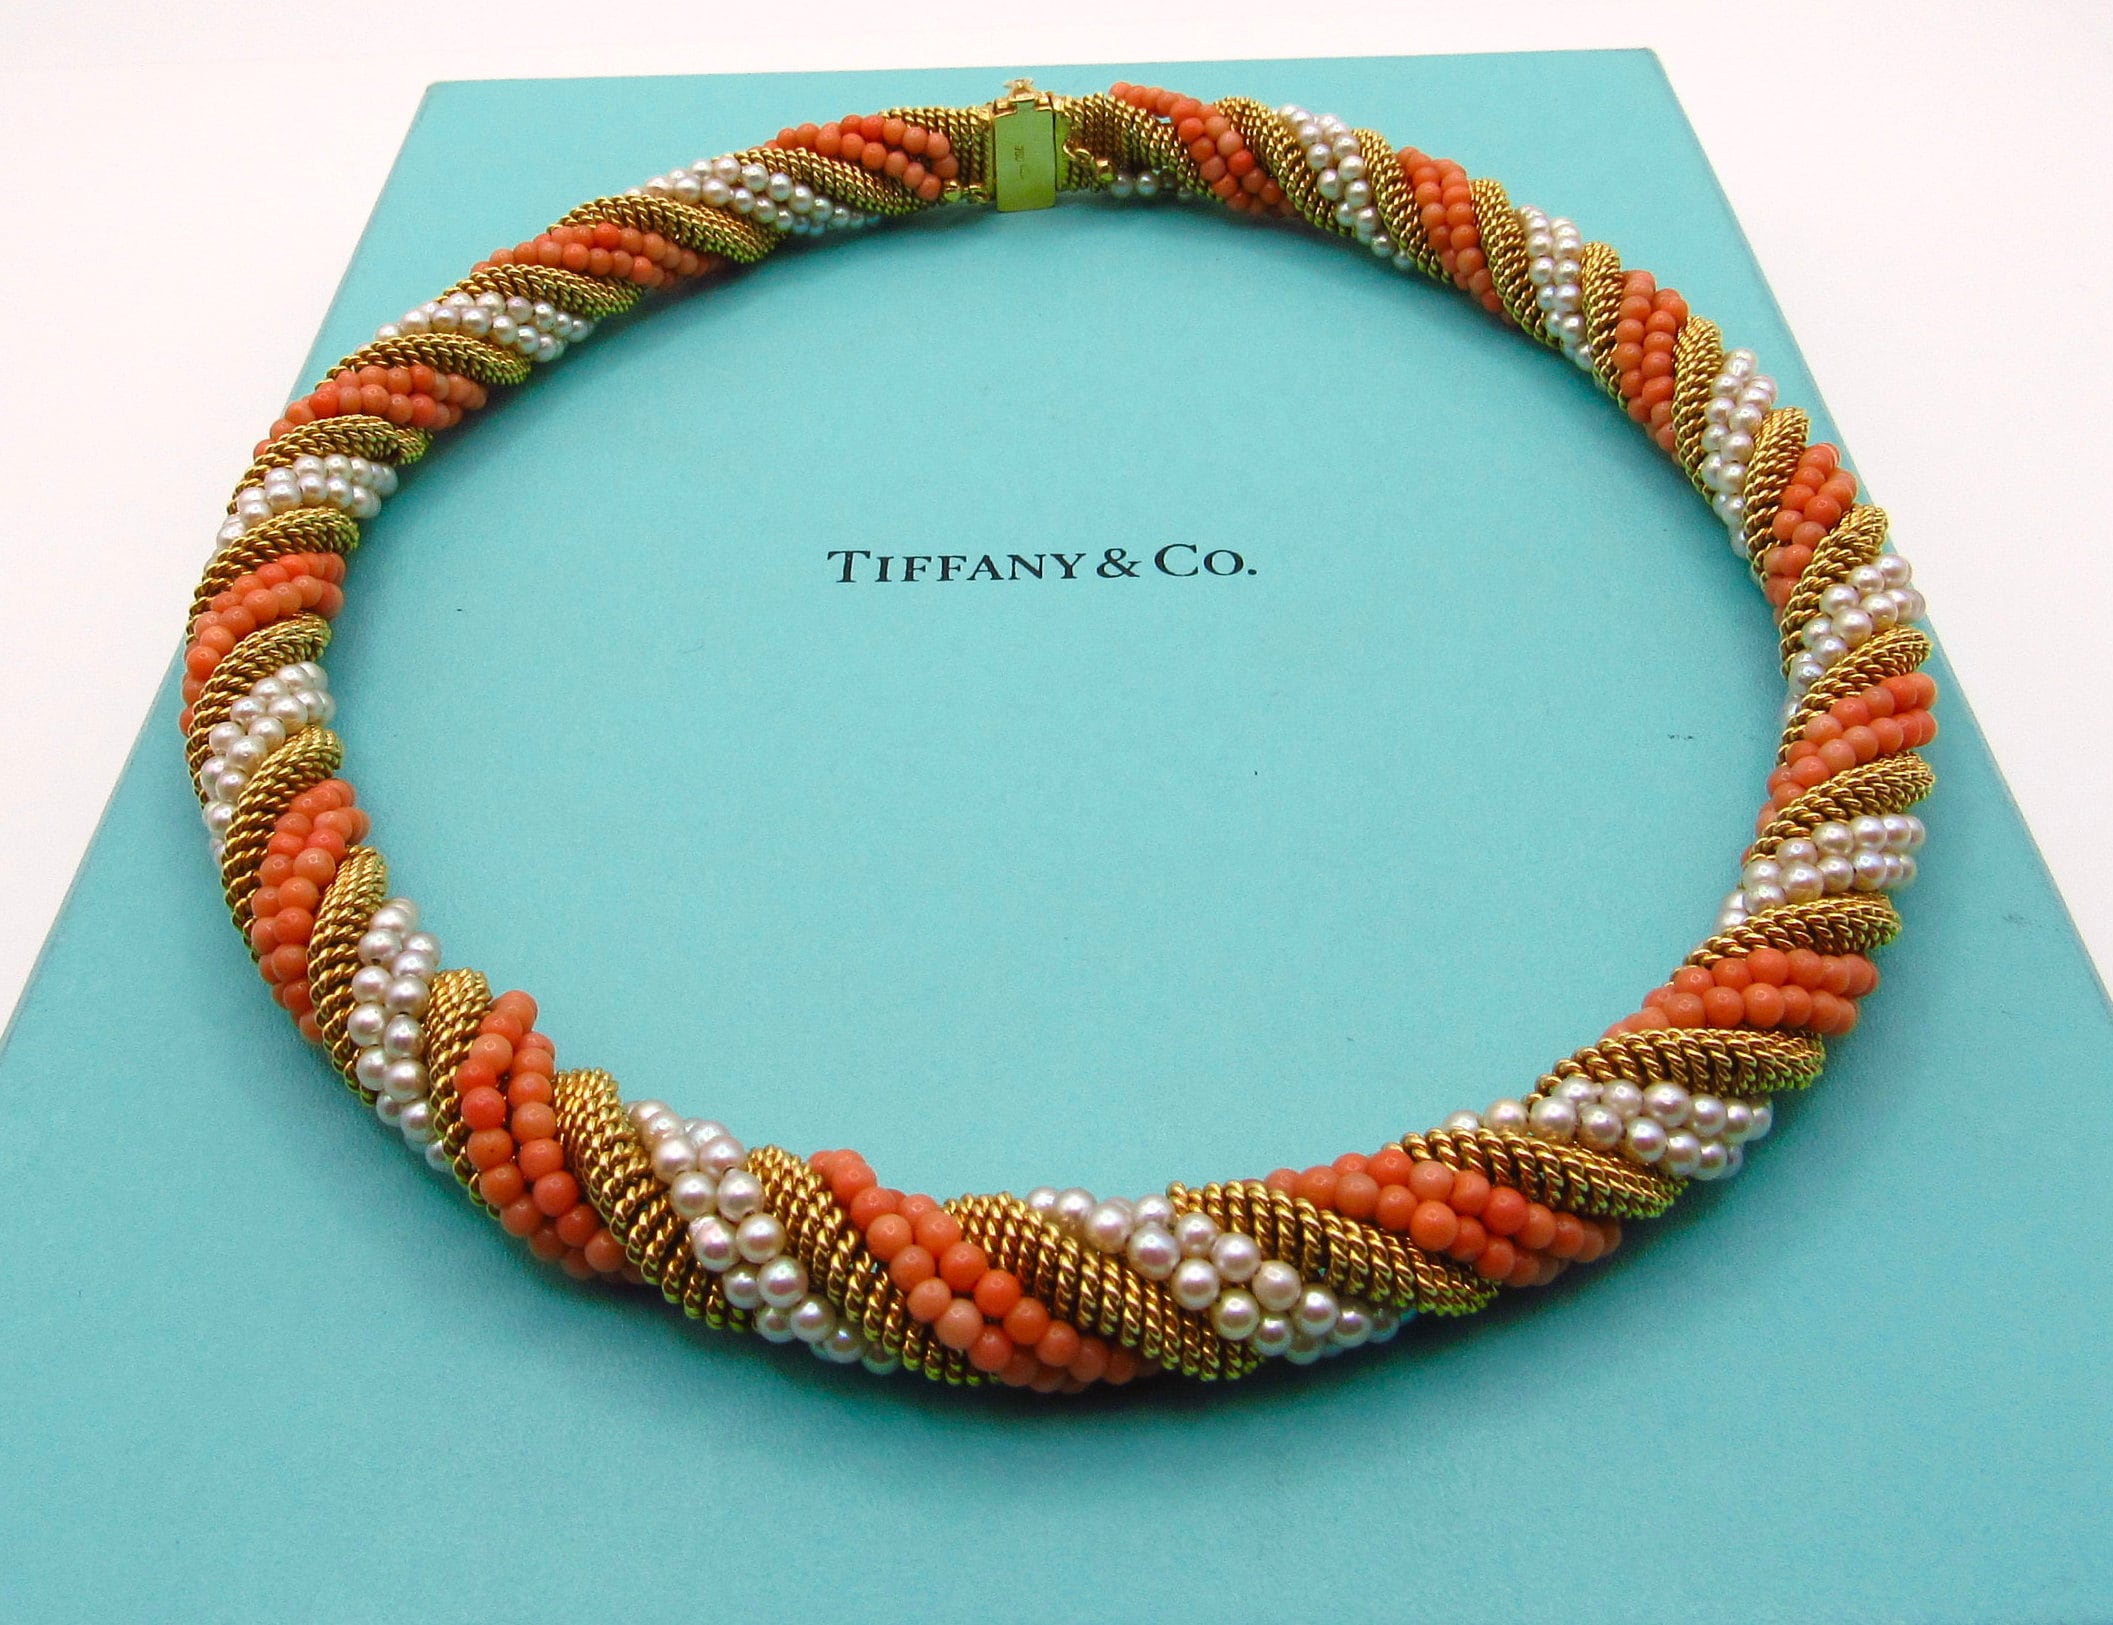 Tiffany & Co. Shopping Bag 18k Two Tone Gold Charm - Ruby Lane